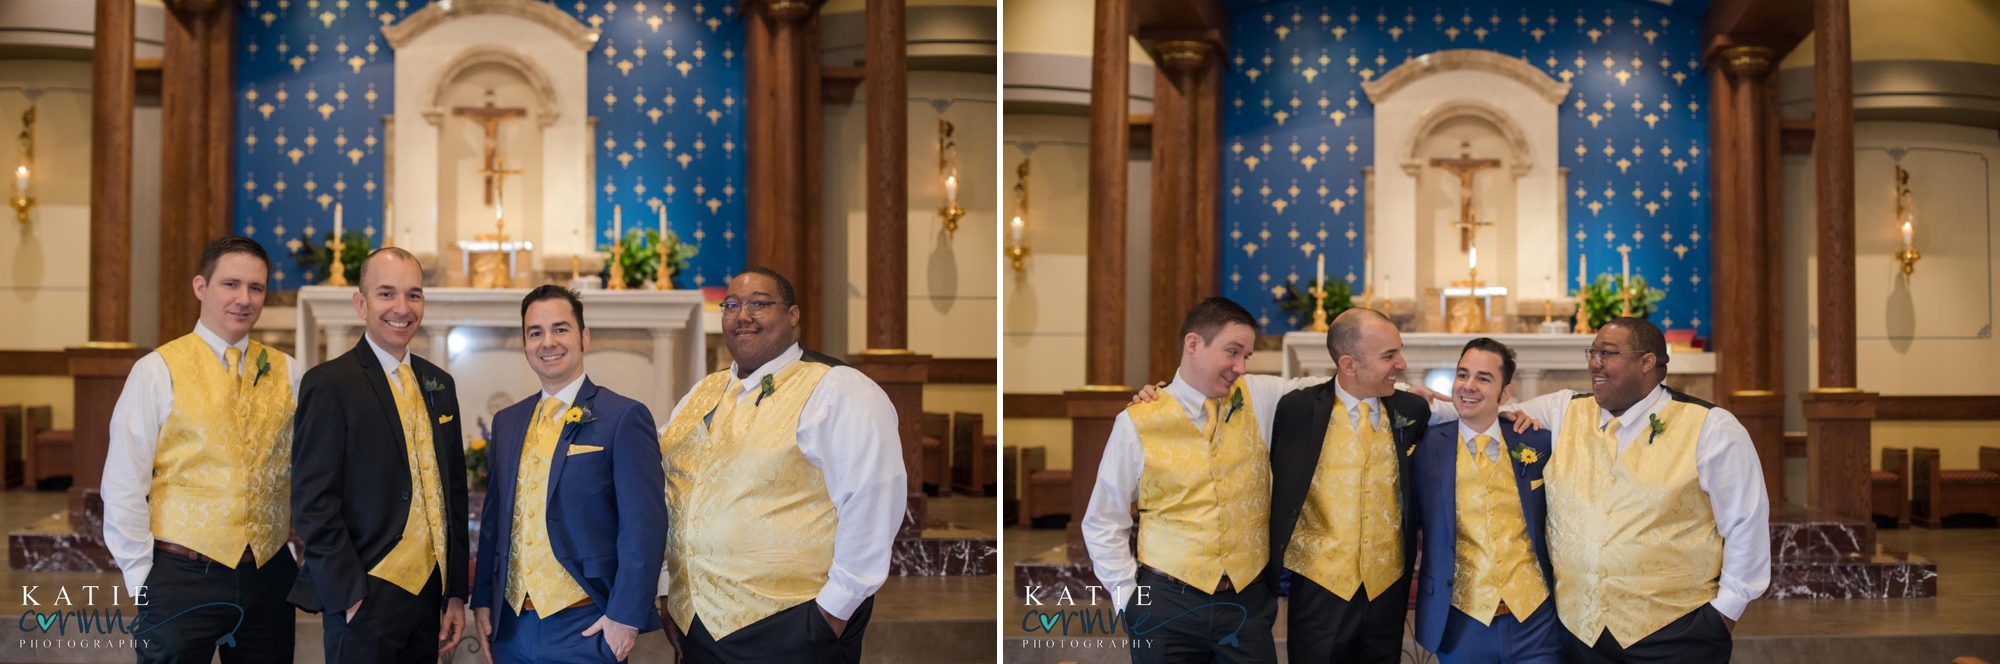 groom and groomsmen at Colorado church wedding